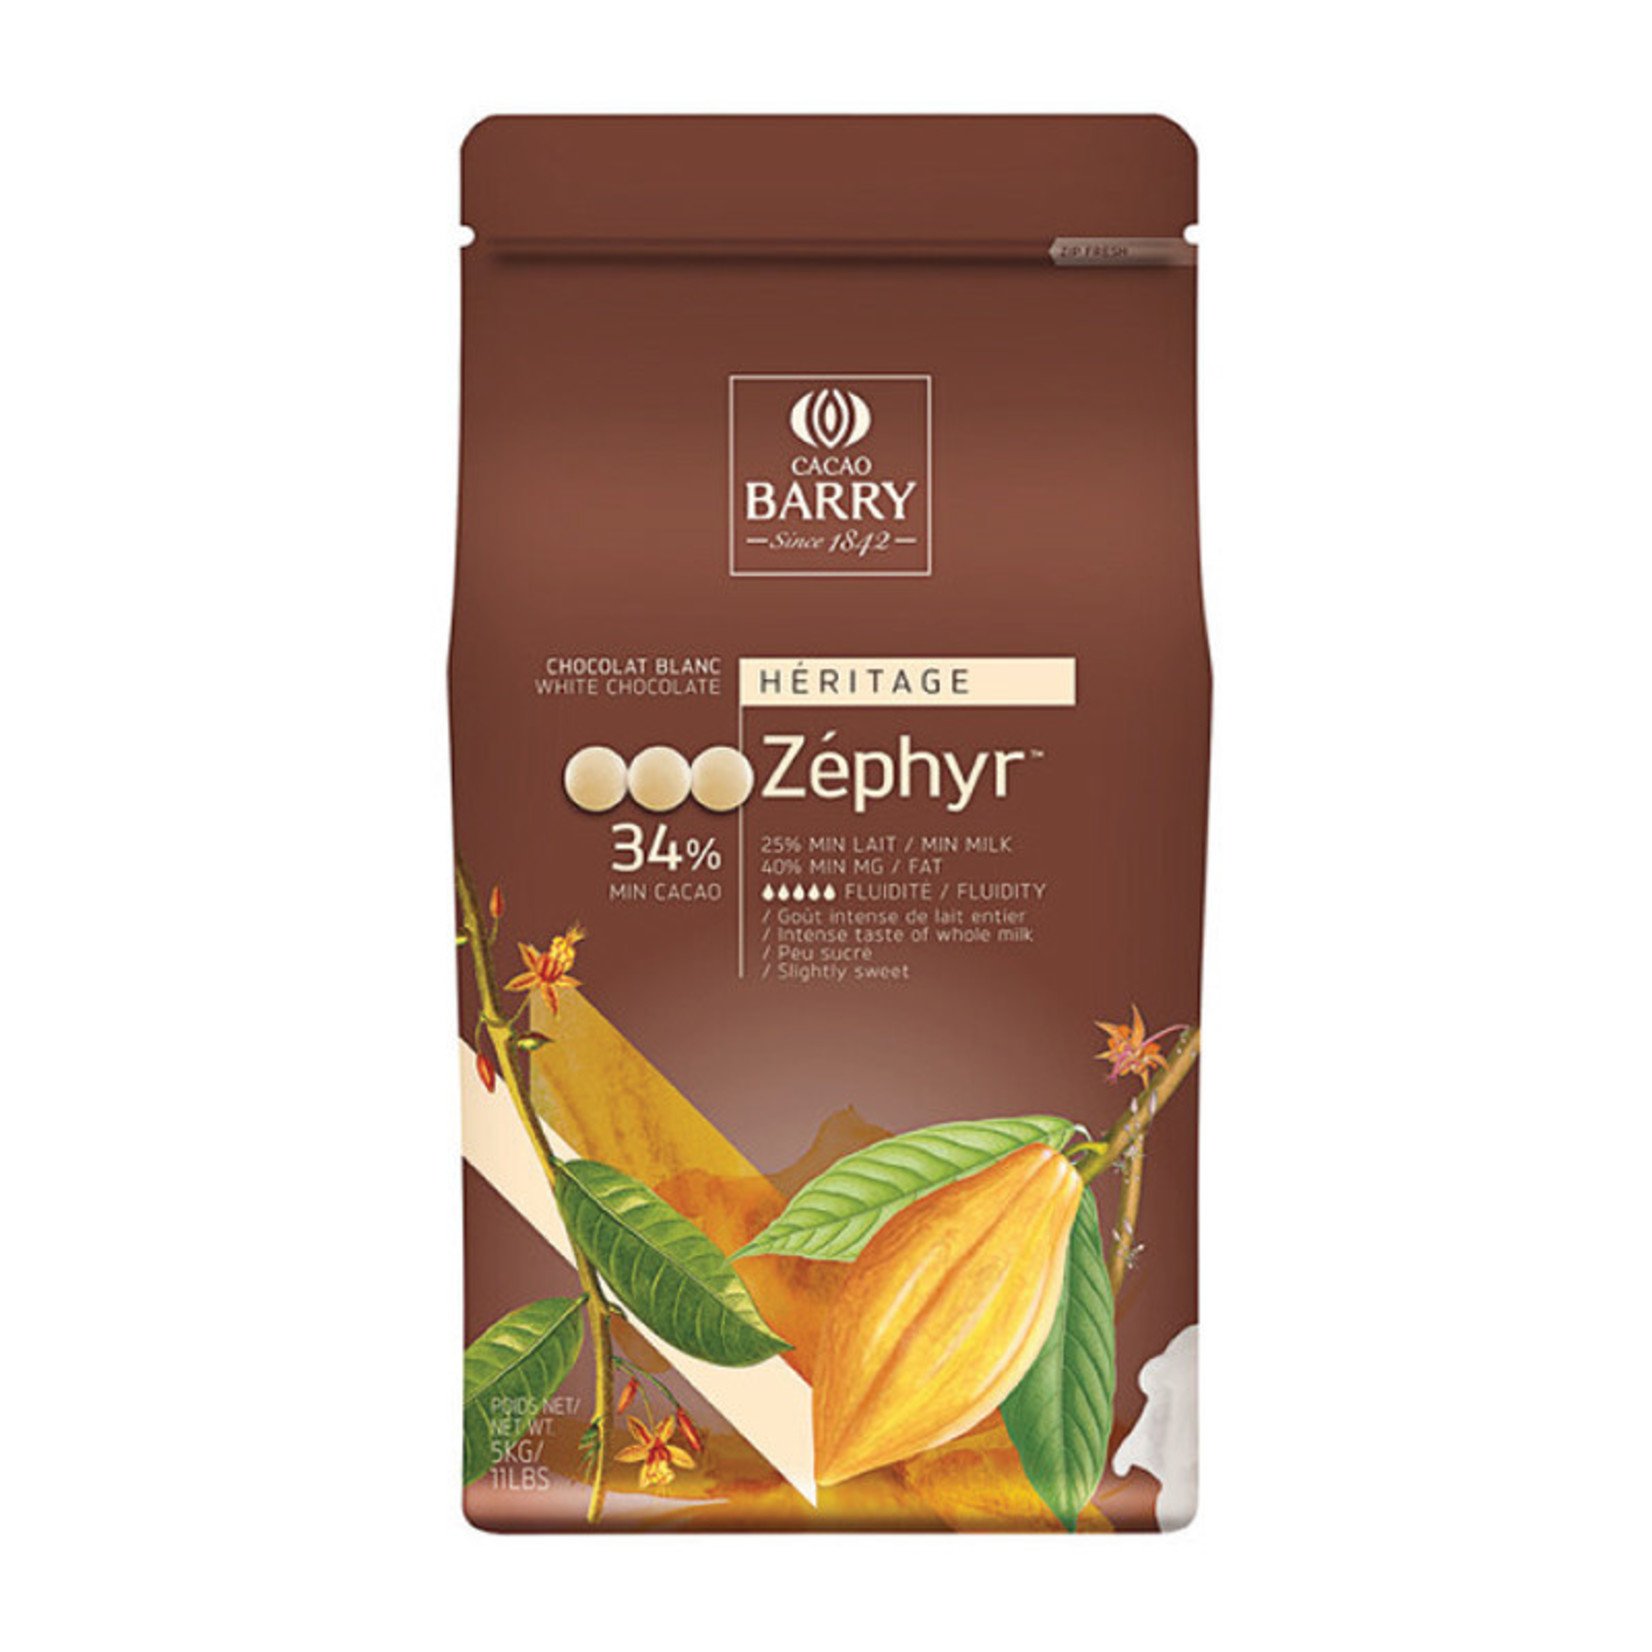 Cacao Barry Cacao Barry - Zephyr White Chocolate 34% - 11 lb